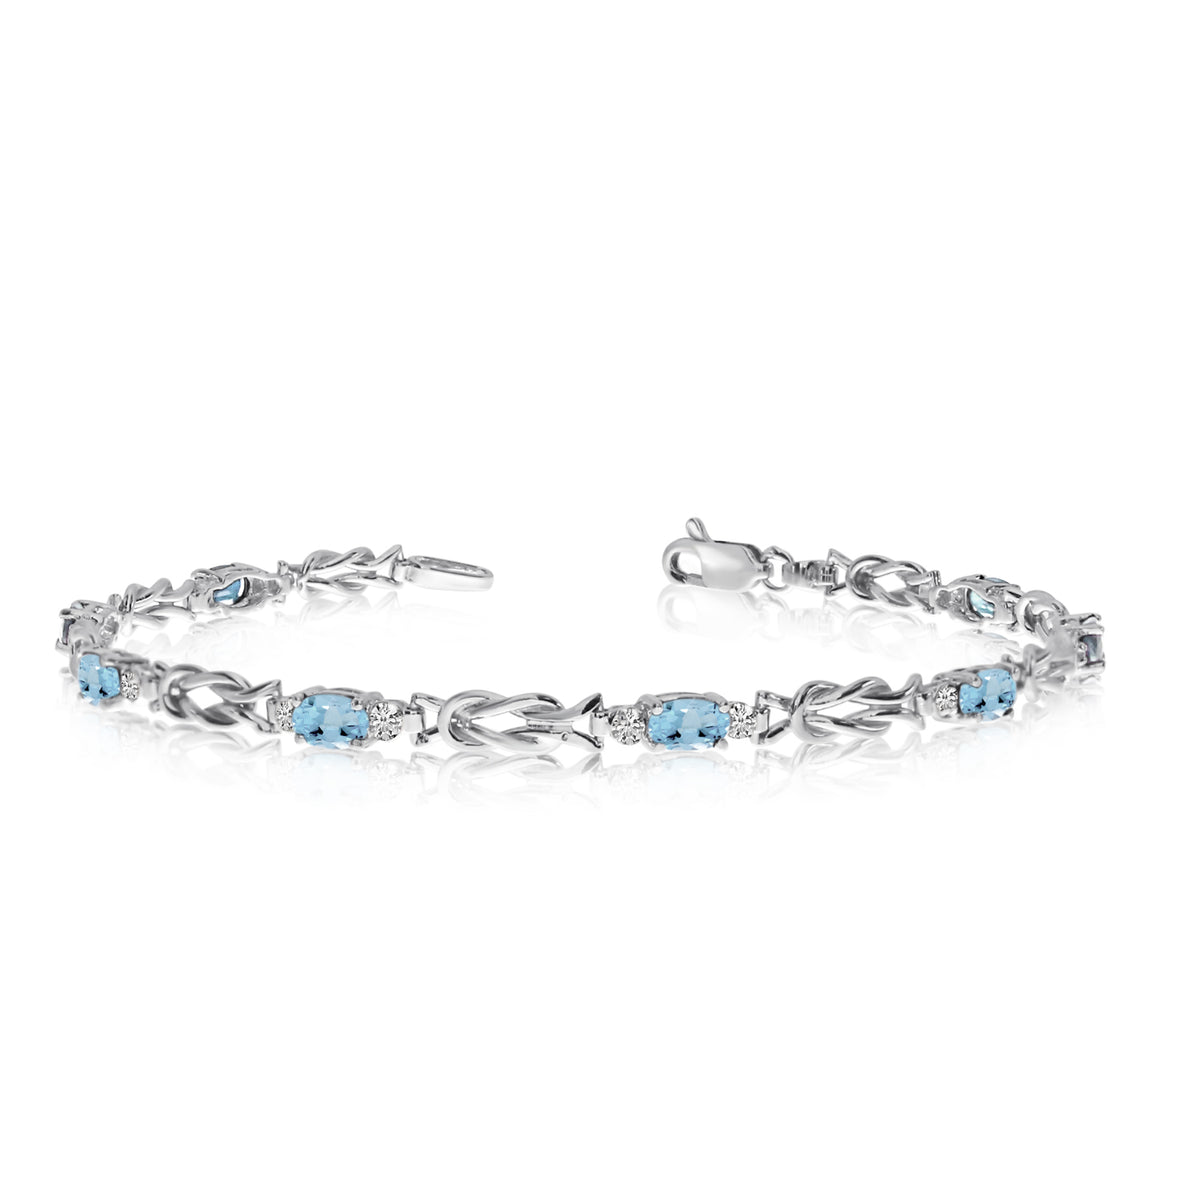 14K White Gold Oval Aquamarine Stones And Diamonds Tennis Bracelet, 7" fine designer jewelry for men and women